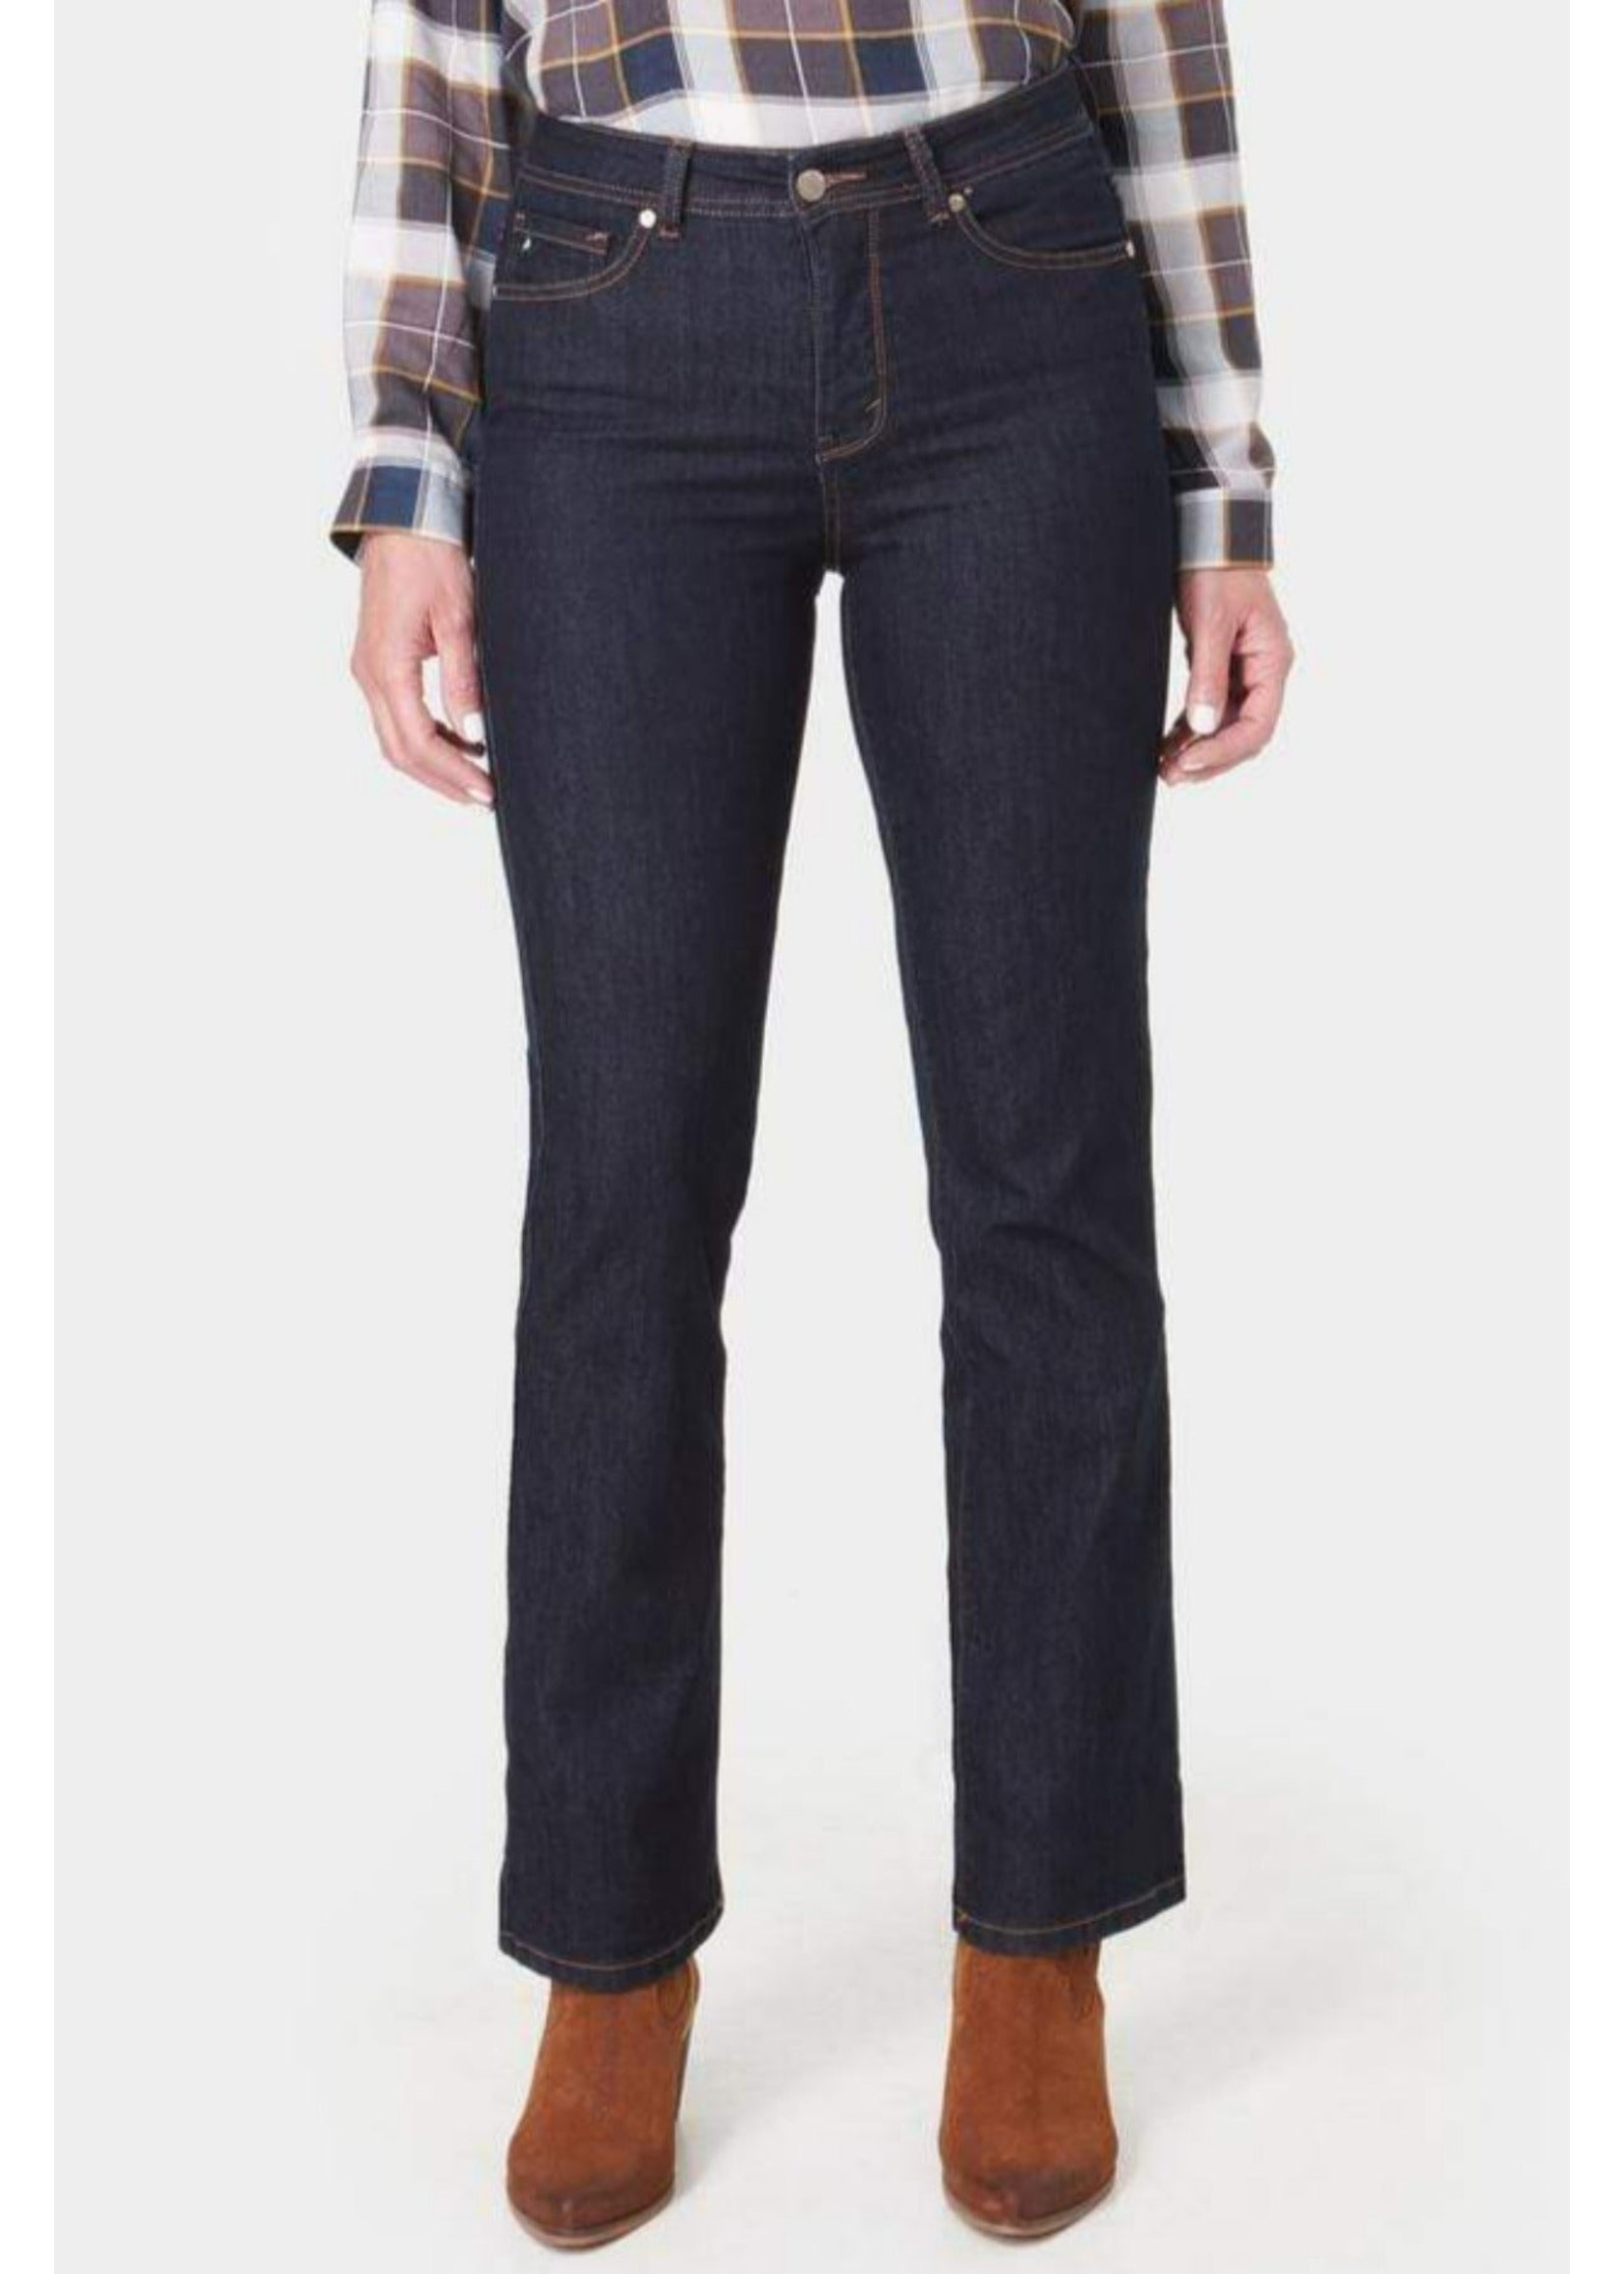 Lois Blackbull Apparel Erika Boot Cut Jeans - Flattering High Rise